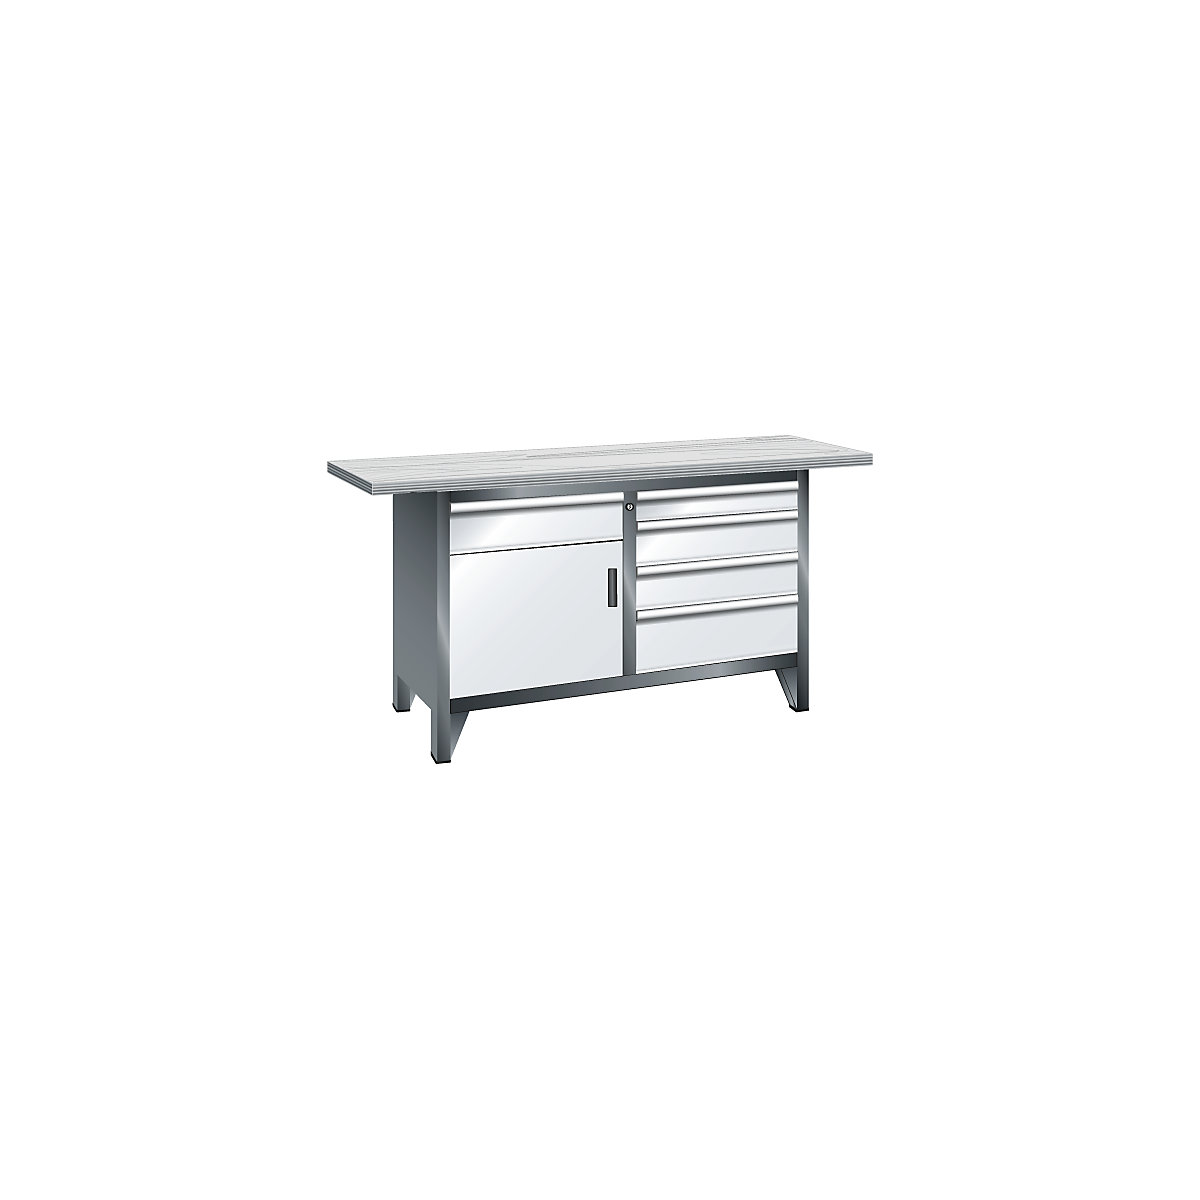 Workbench width 1500 mm, frame construction – LISTA, 1 shelf, 5 drawers, 1 door, body grey metallic, front light grey-7